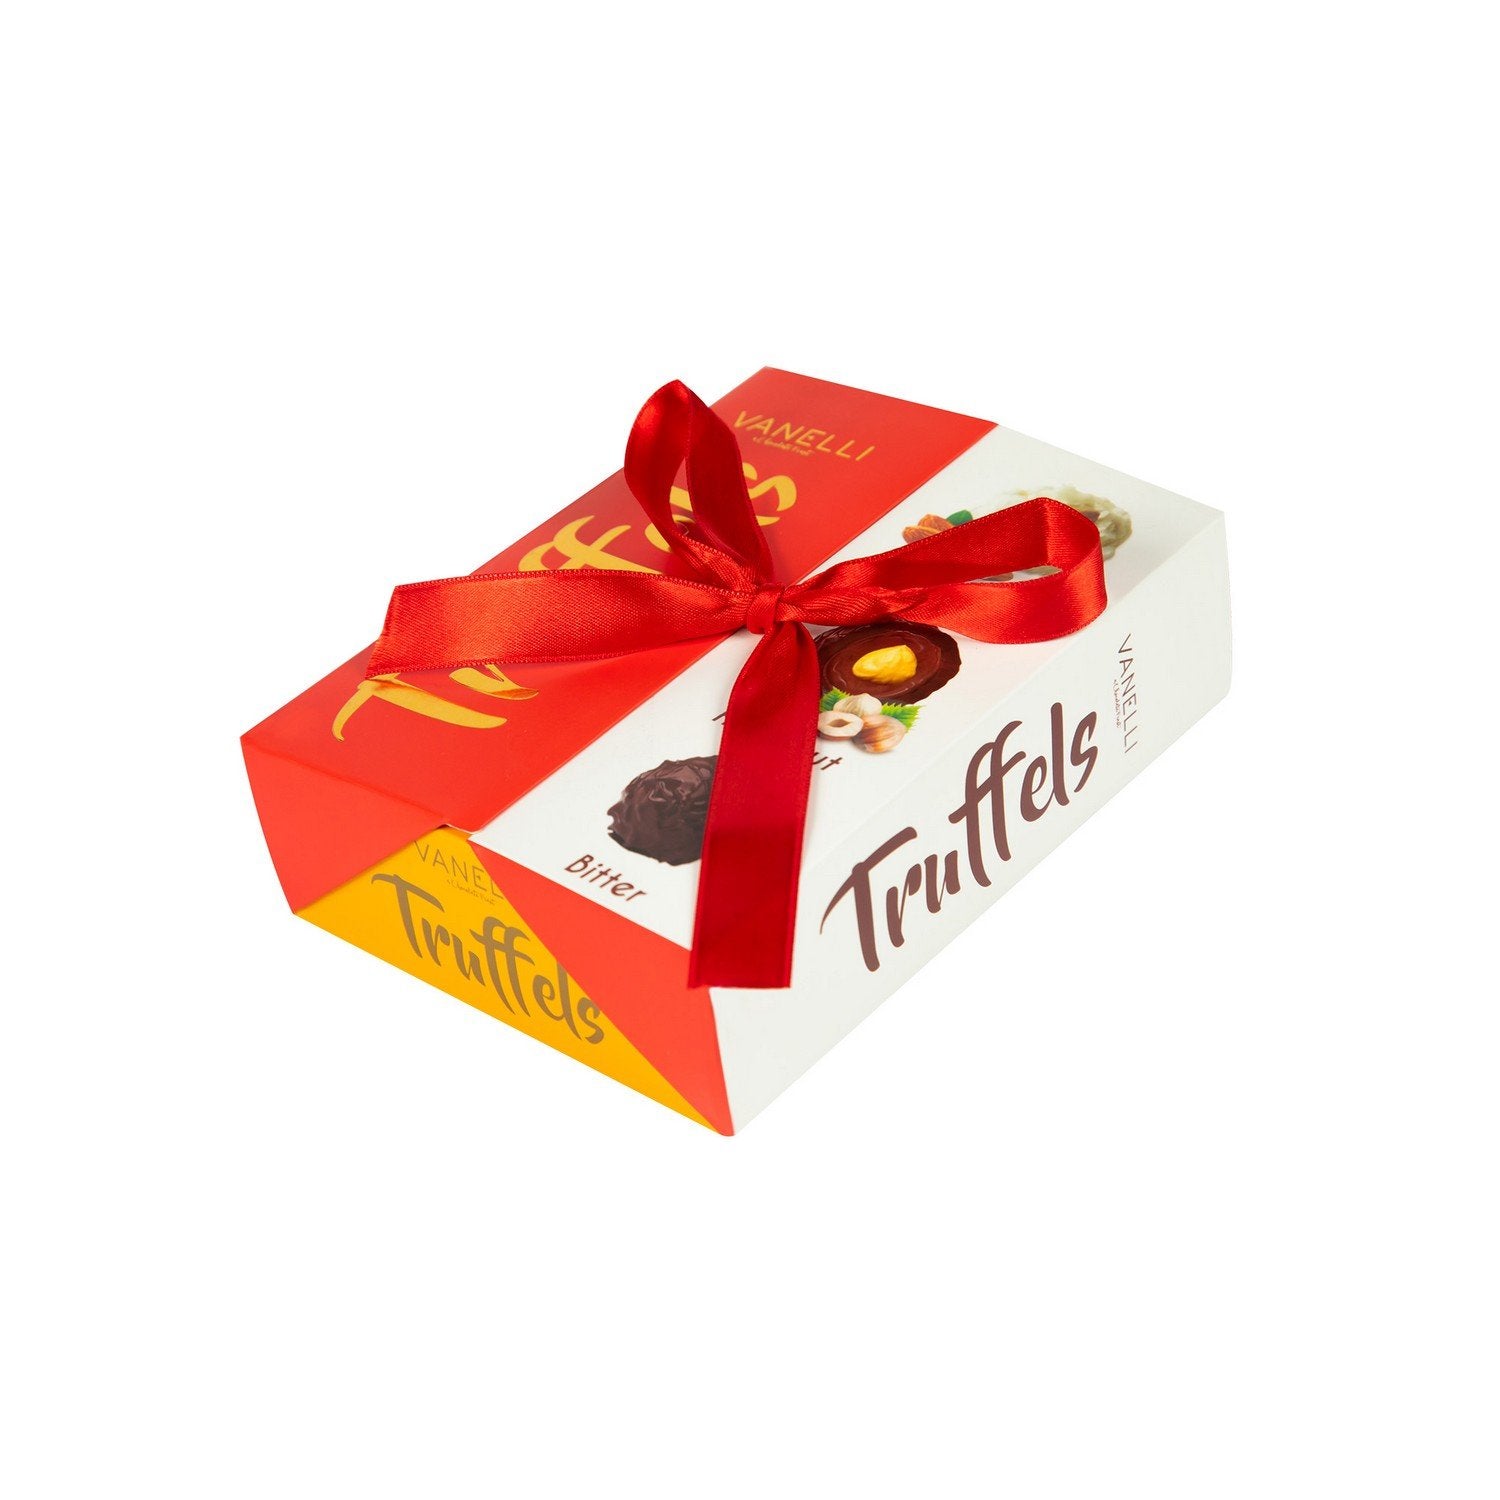 truffels-truffle-chocolate